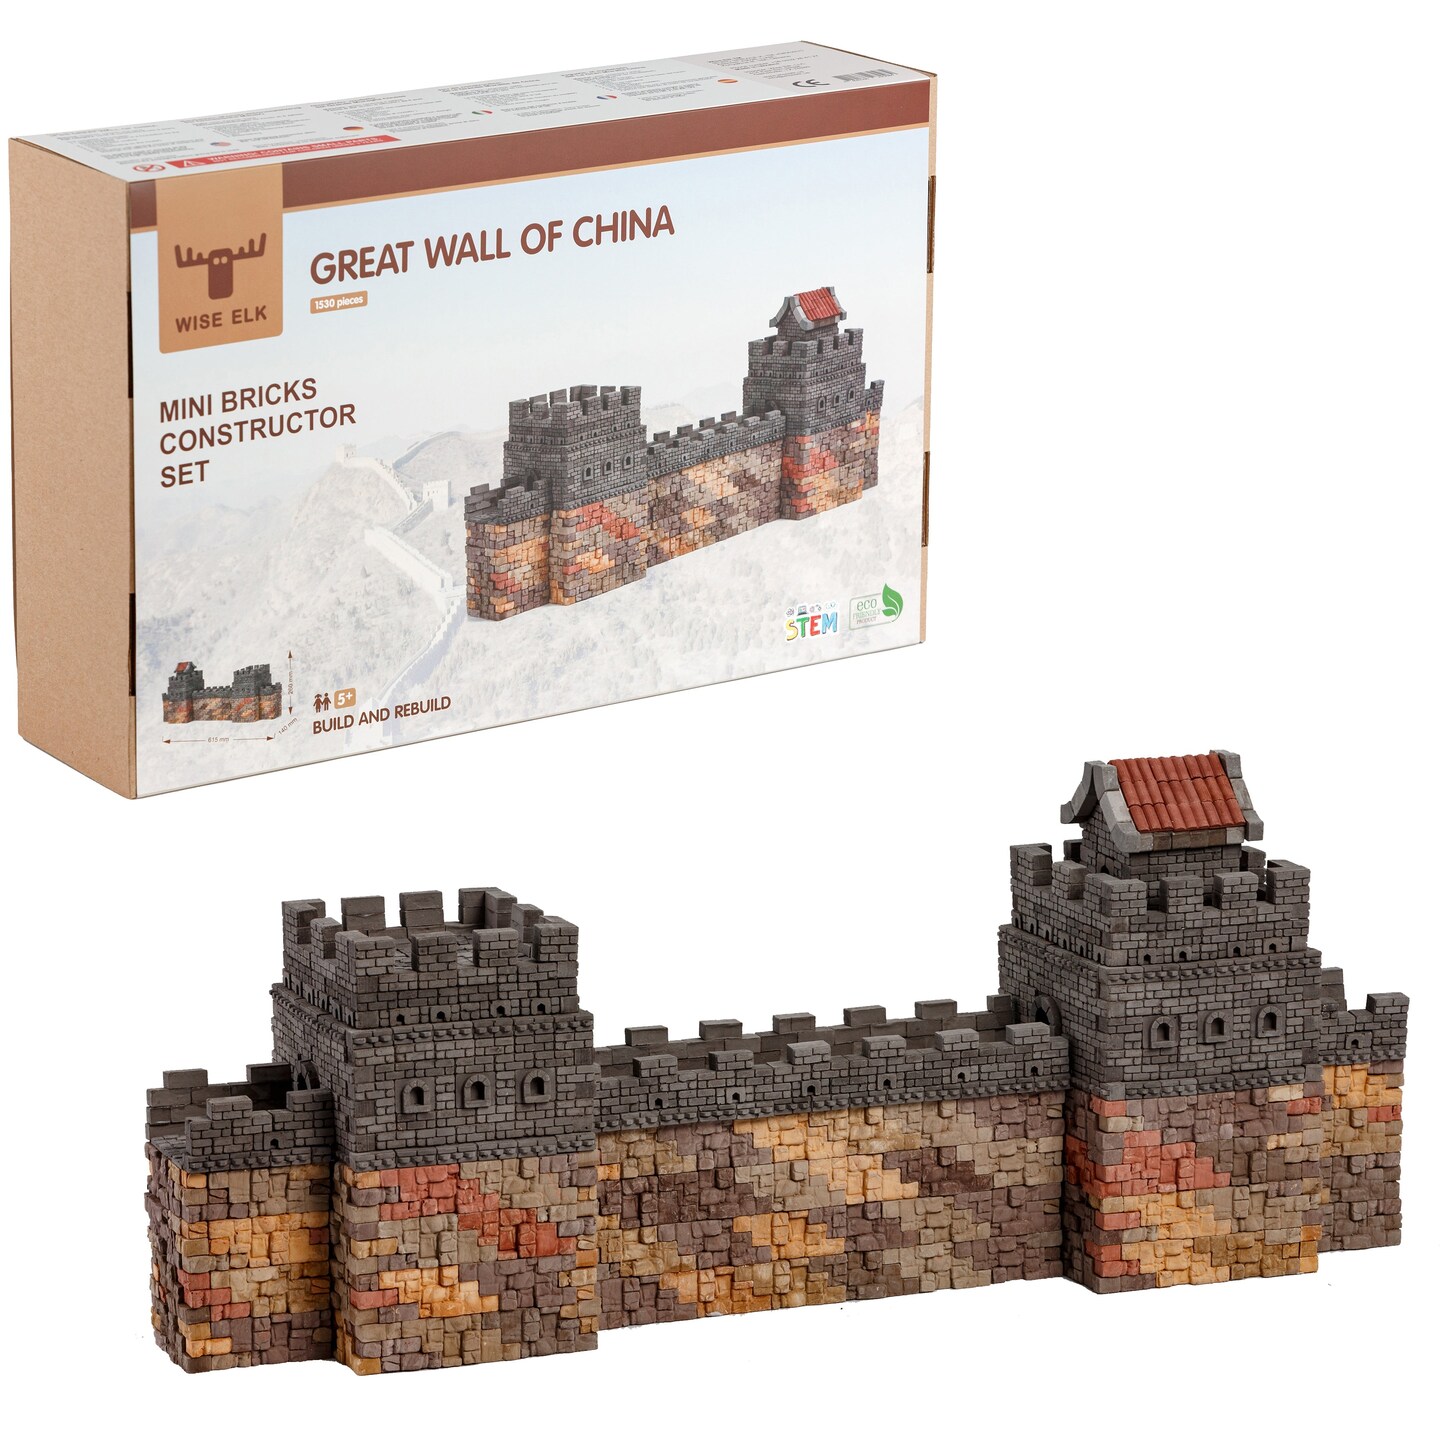 Mini Bricks Construction Set - Great Wall of China